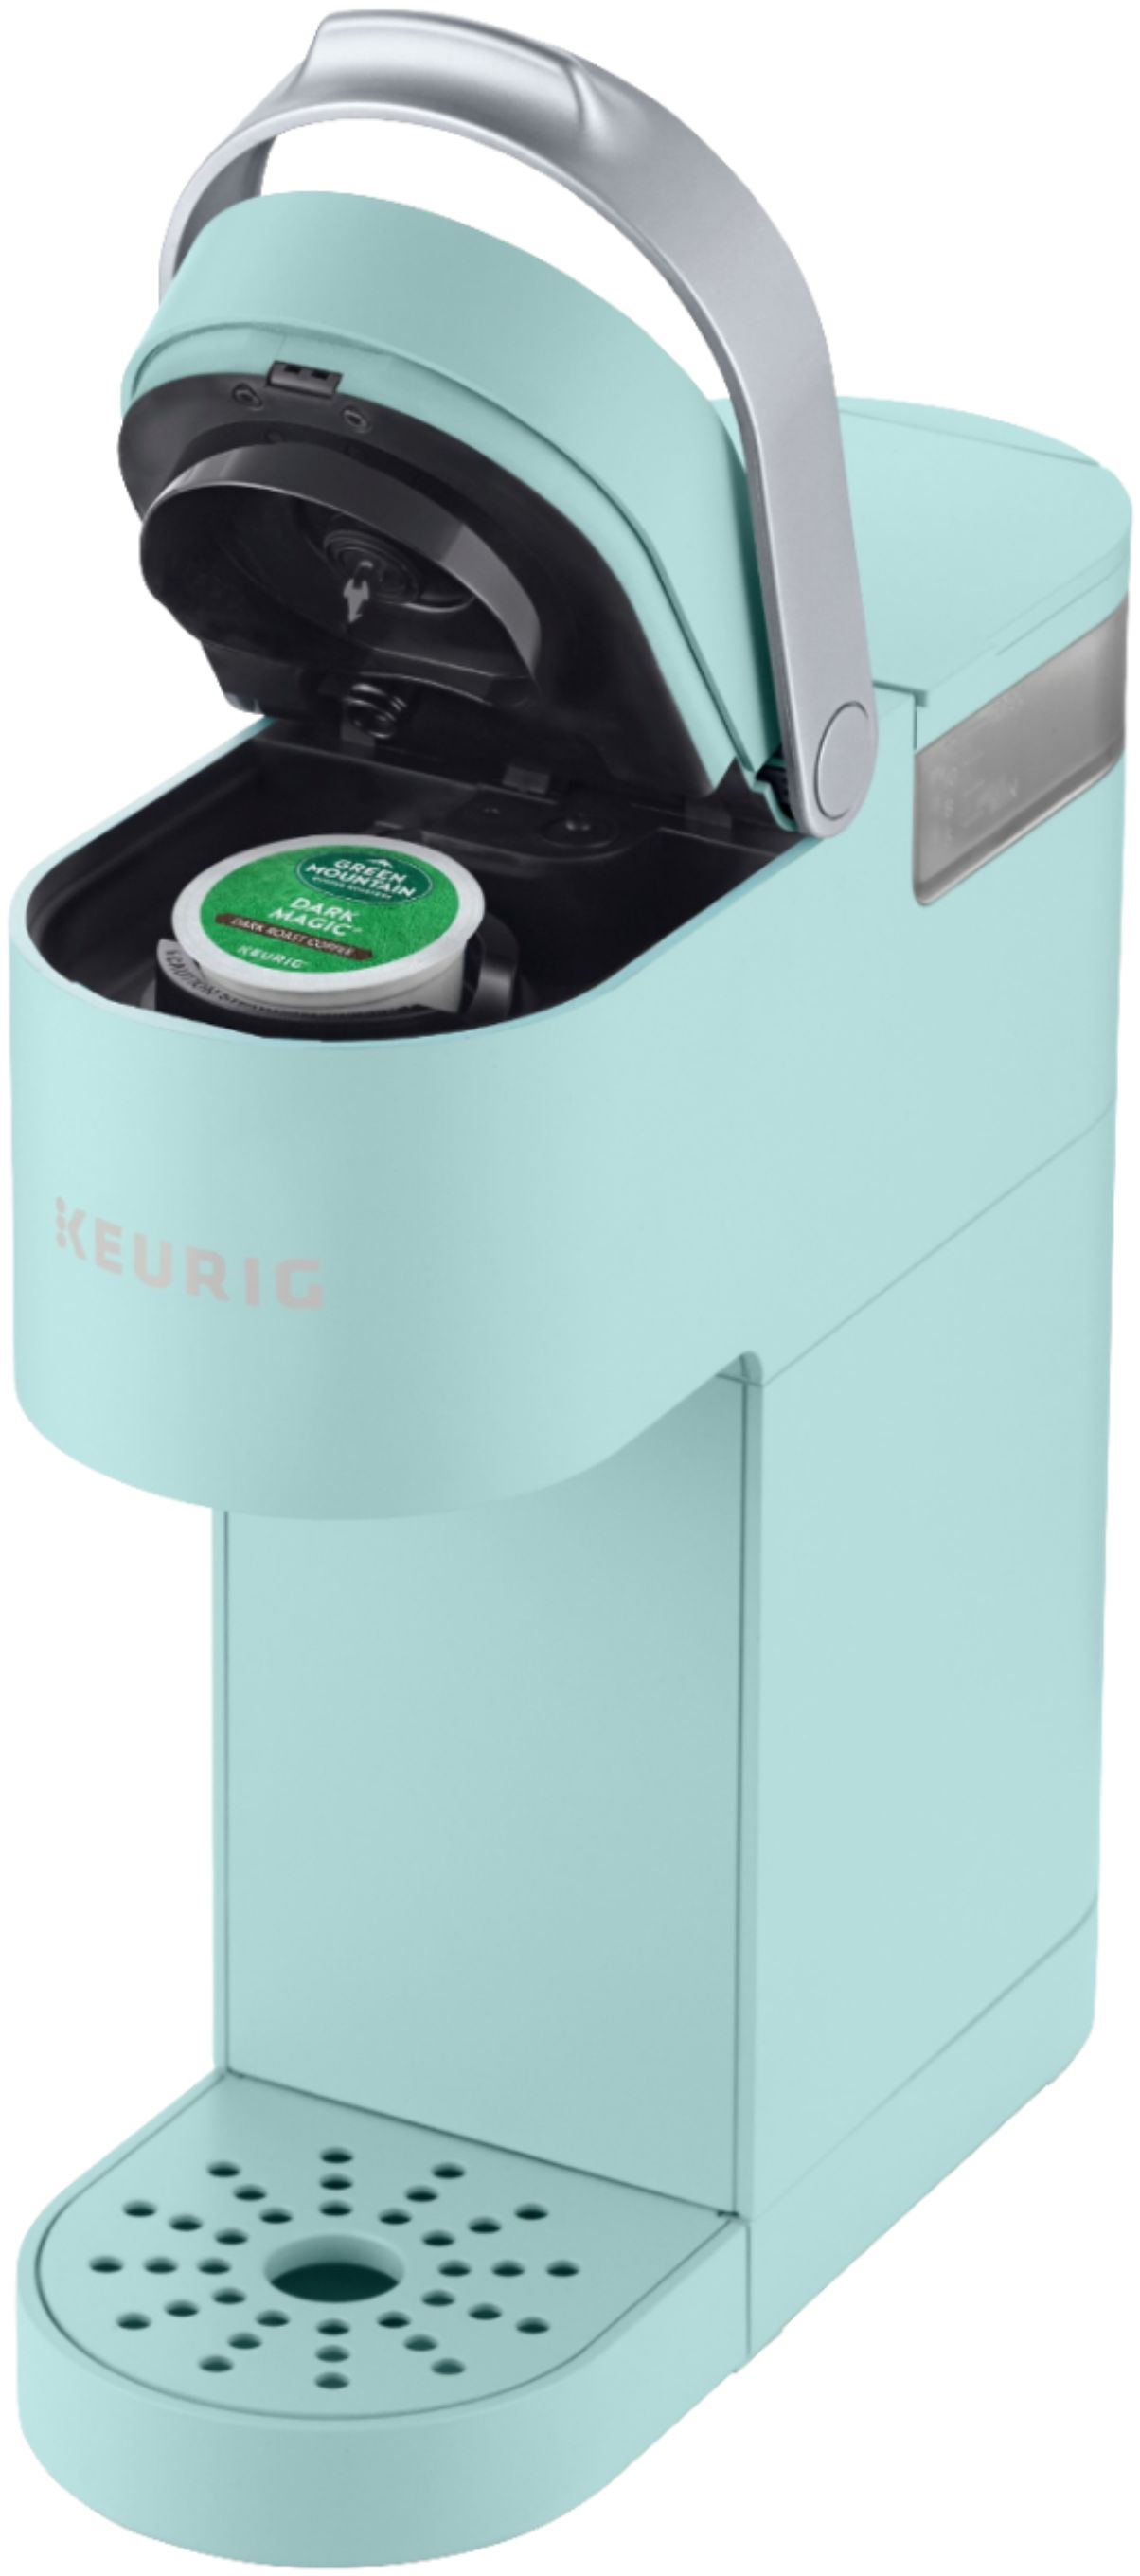 Keurig® K-Mini Single Serve Coffee Maker - Chill Green, 1 ct - Harris Teeter